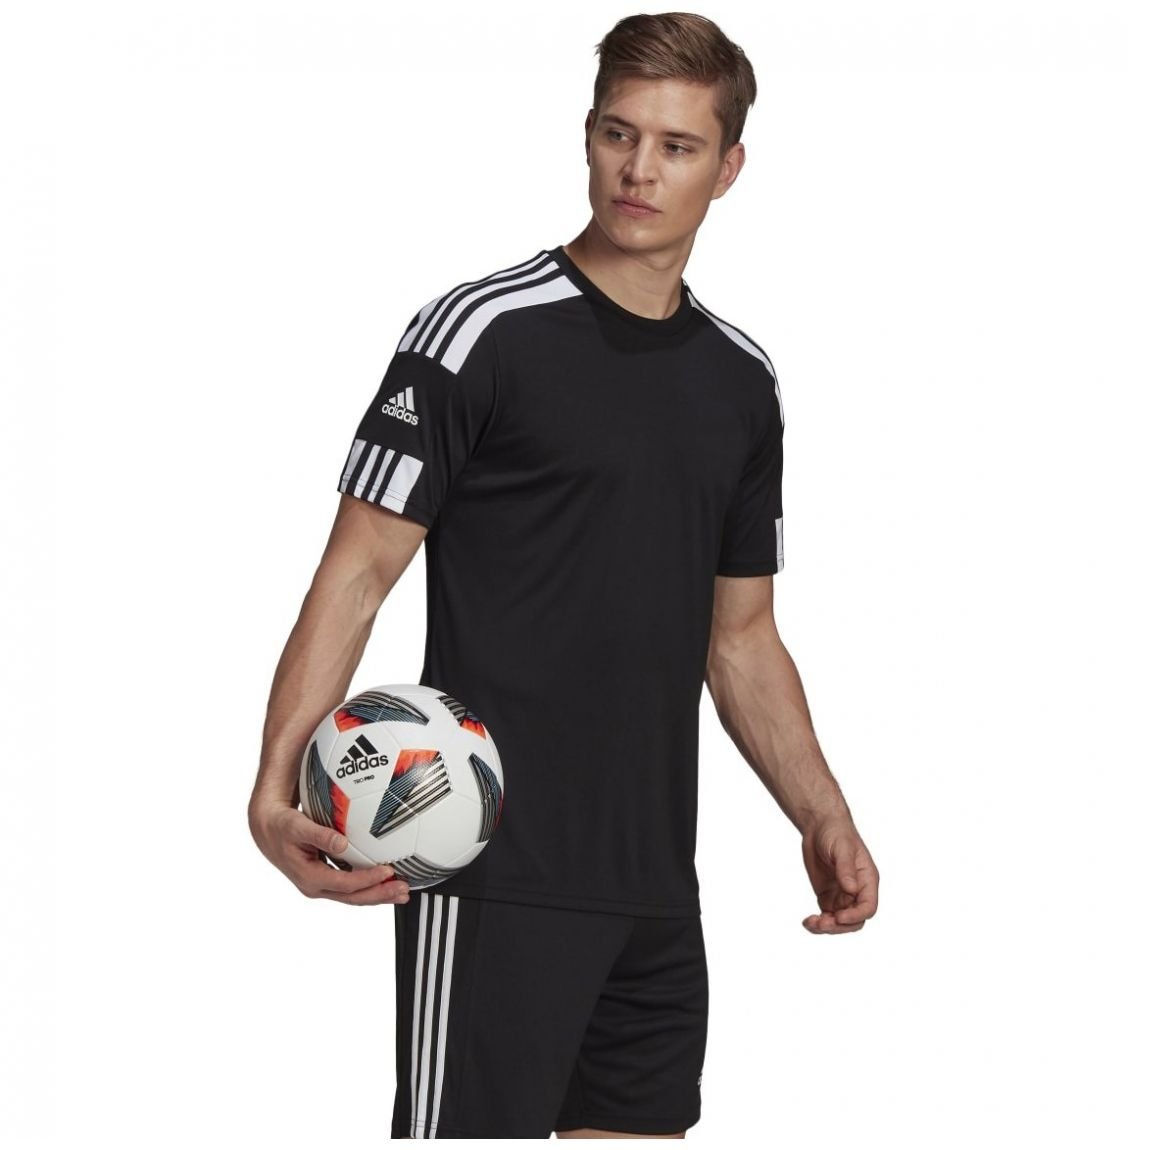 Jersey Adidas Soccer para Hombre